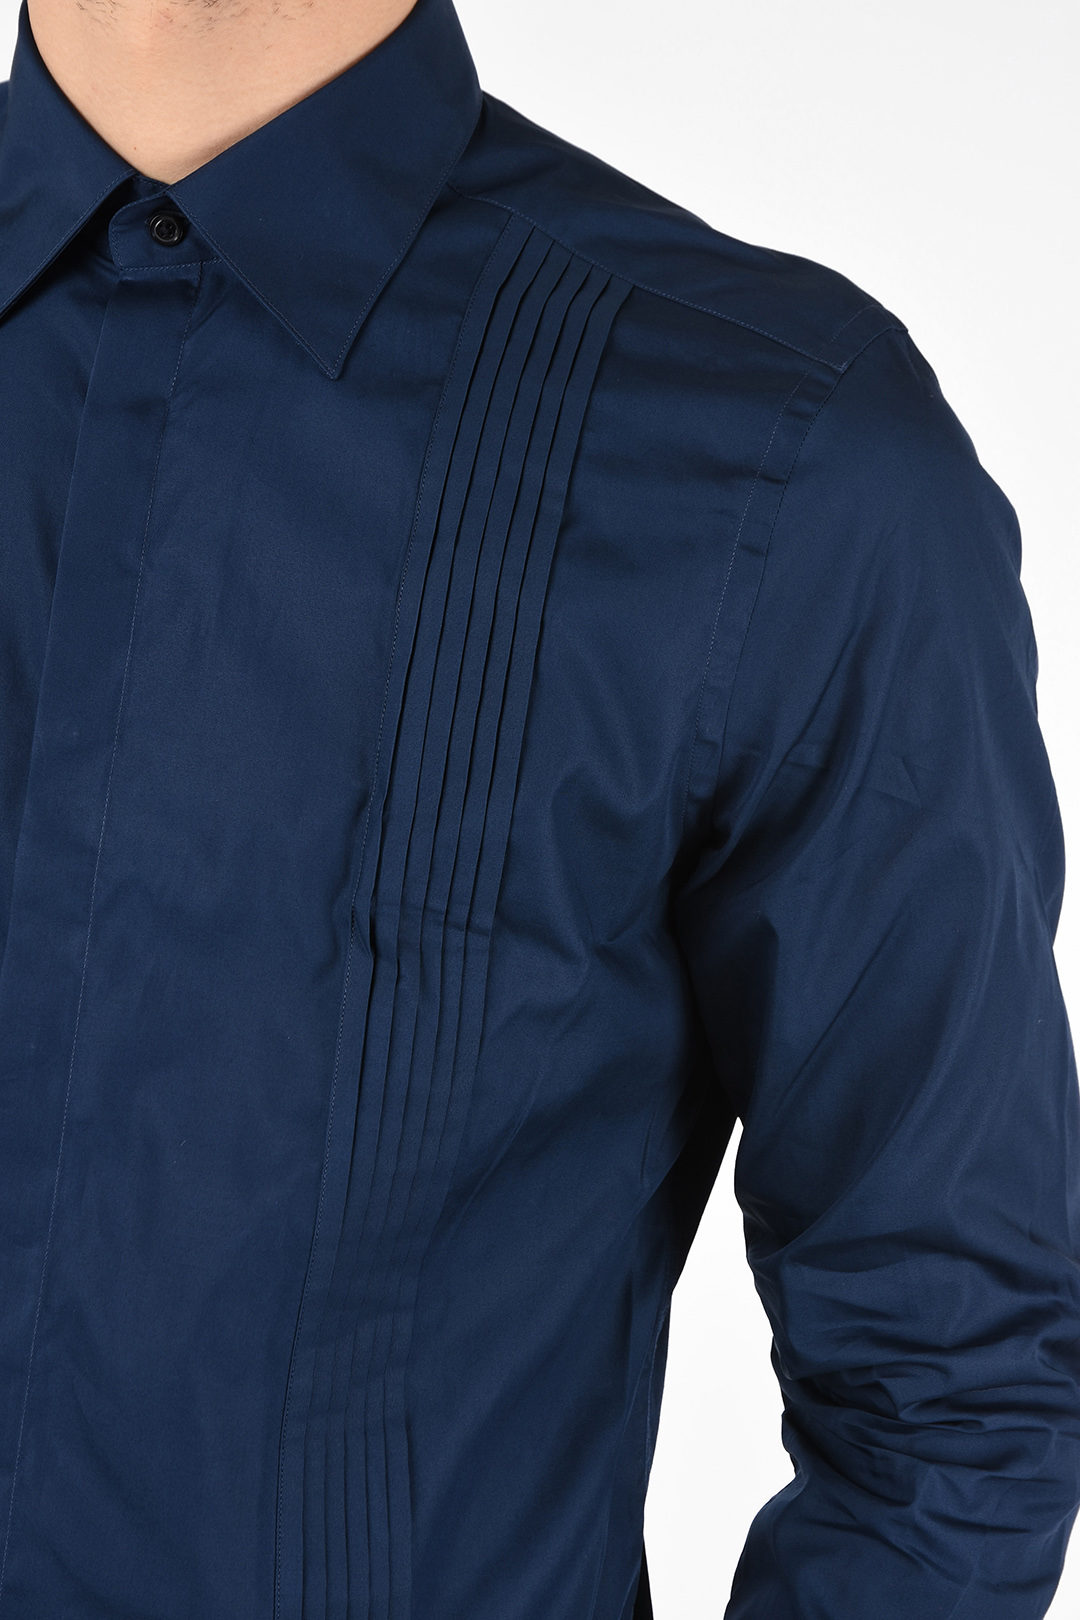 Corneliani CC COLLECTION spread collar pin tuck shirt men - Glamood Outlet